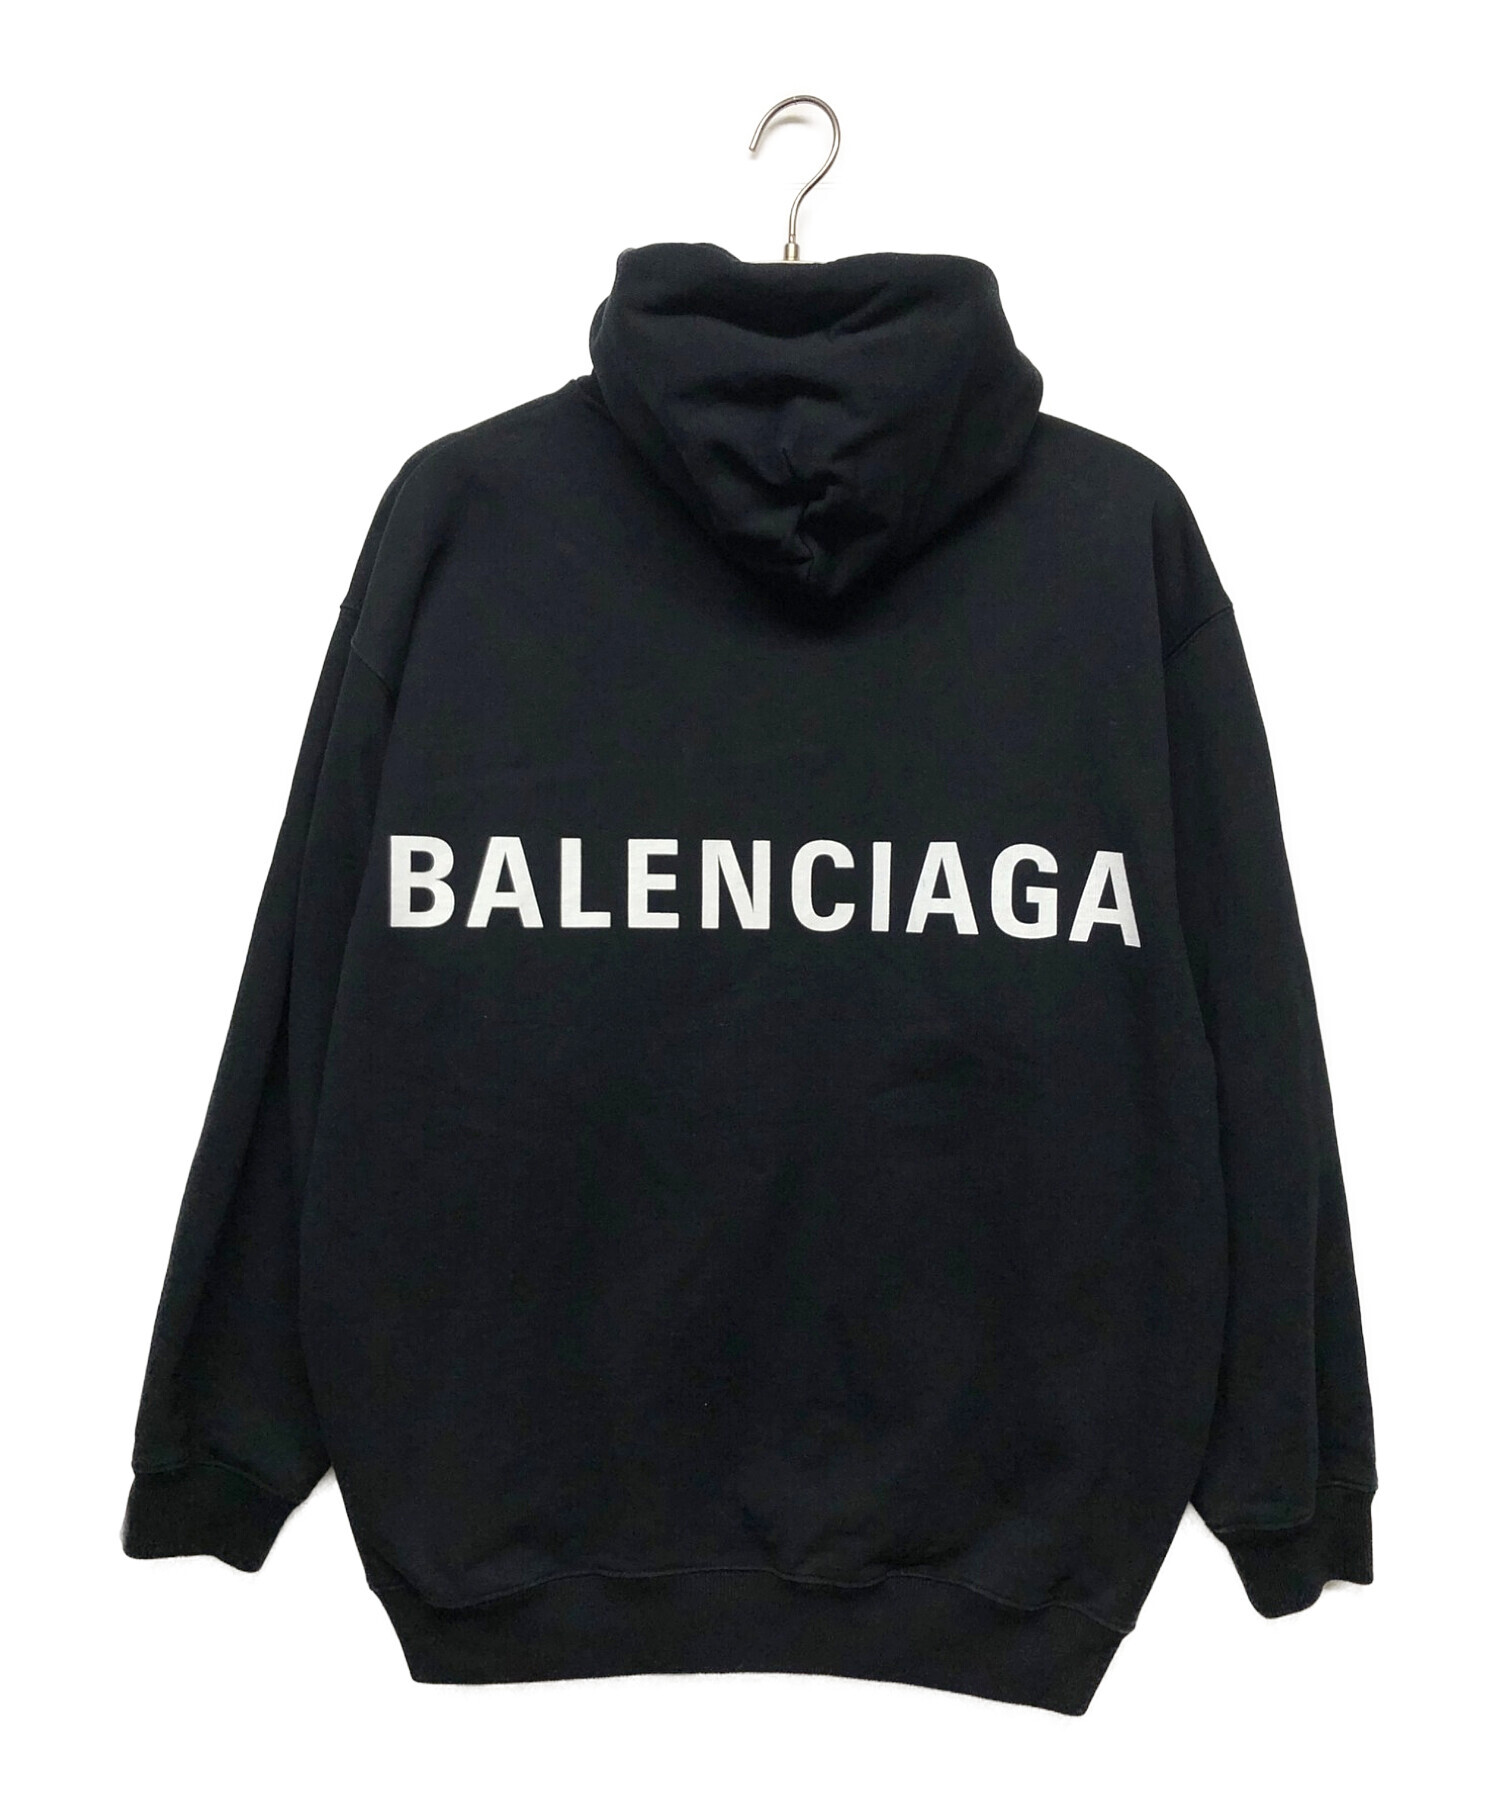 BALENCIAGA (バレンシアガ) バックロゴプリントプルオーバーパーカー ブラック サイズ:S